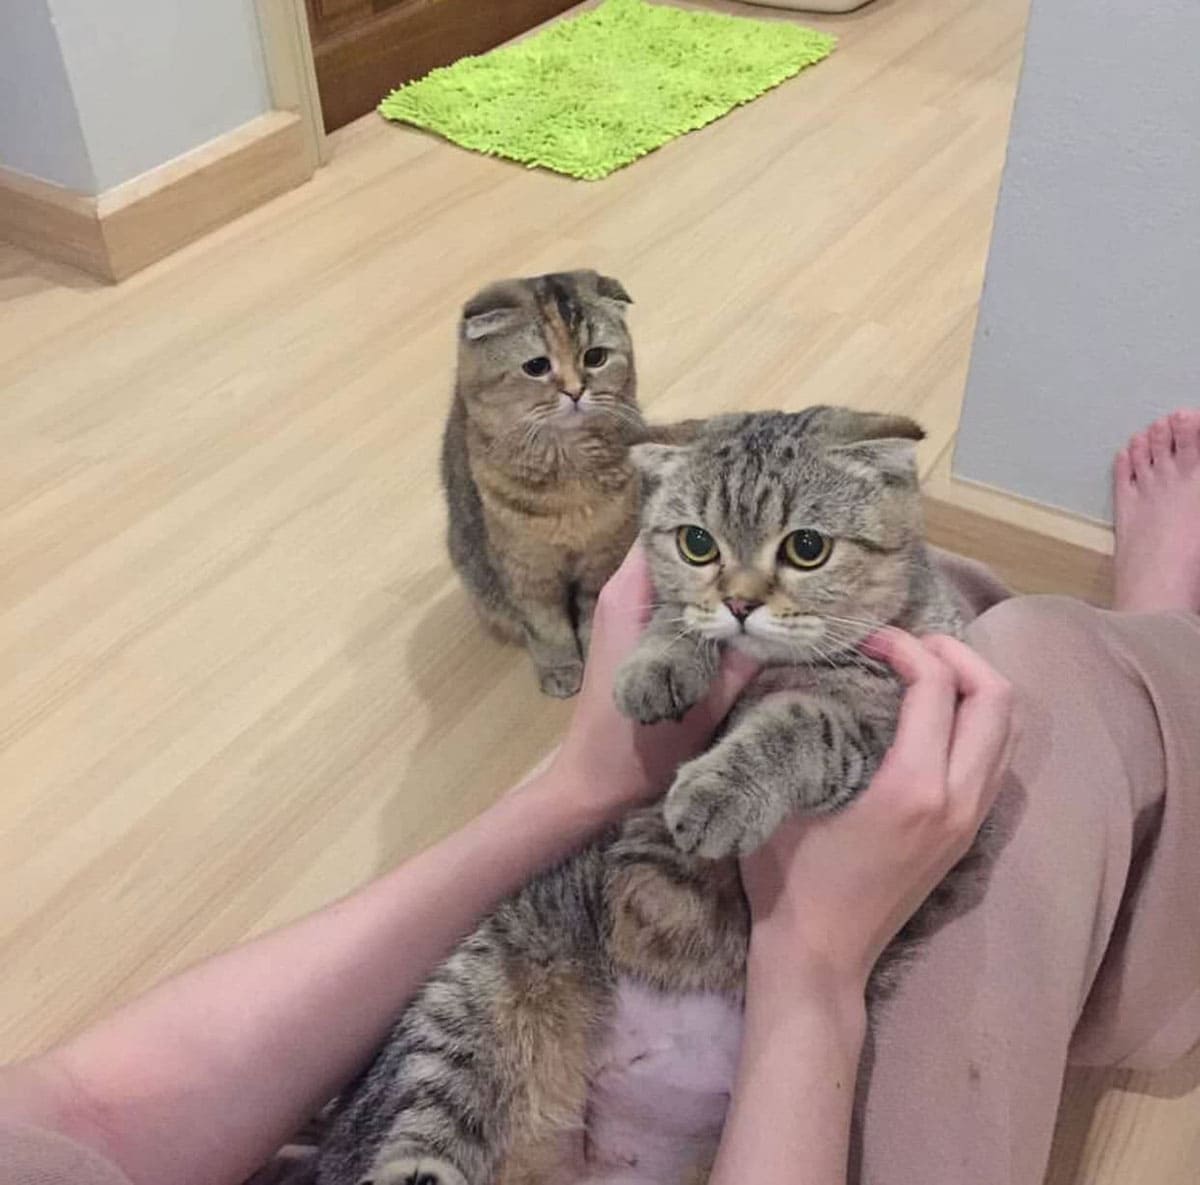 Cat jealous of his other cat friend